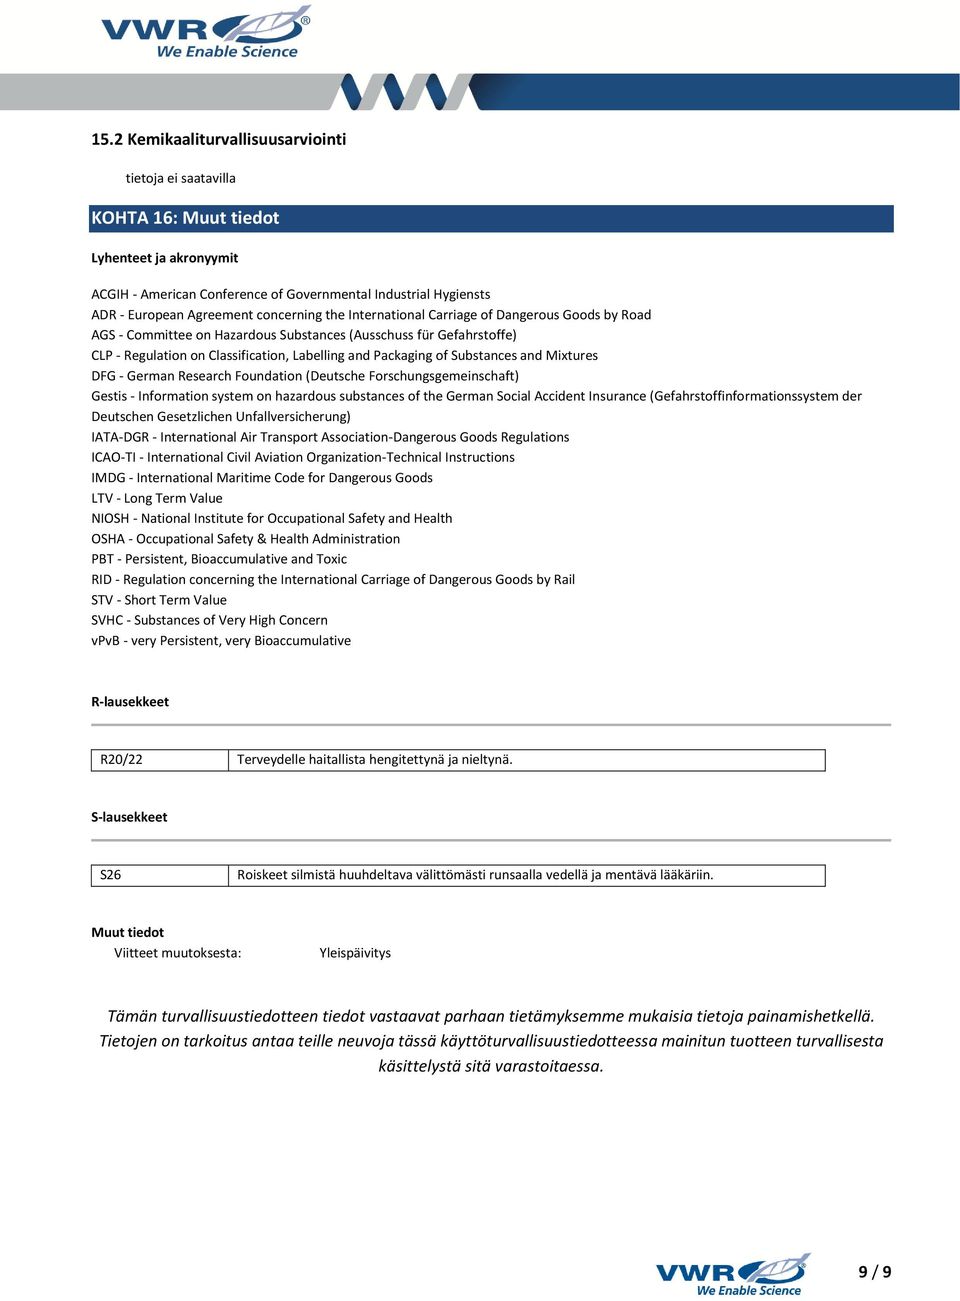 Mixtures DFG - German Research Foundation (Deutsche Forschungsgemeinschaft) Gestis - Information system on hazardous substances of the German Social Accident Insurance (Gefahrstoffinformationssystem